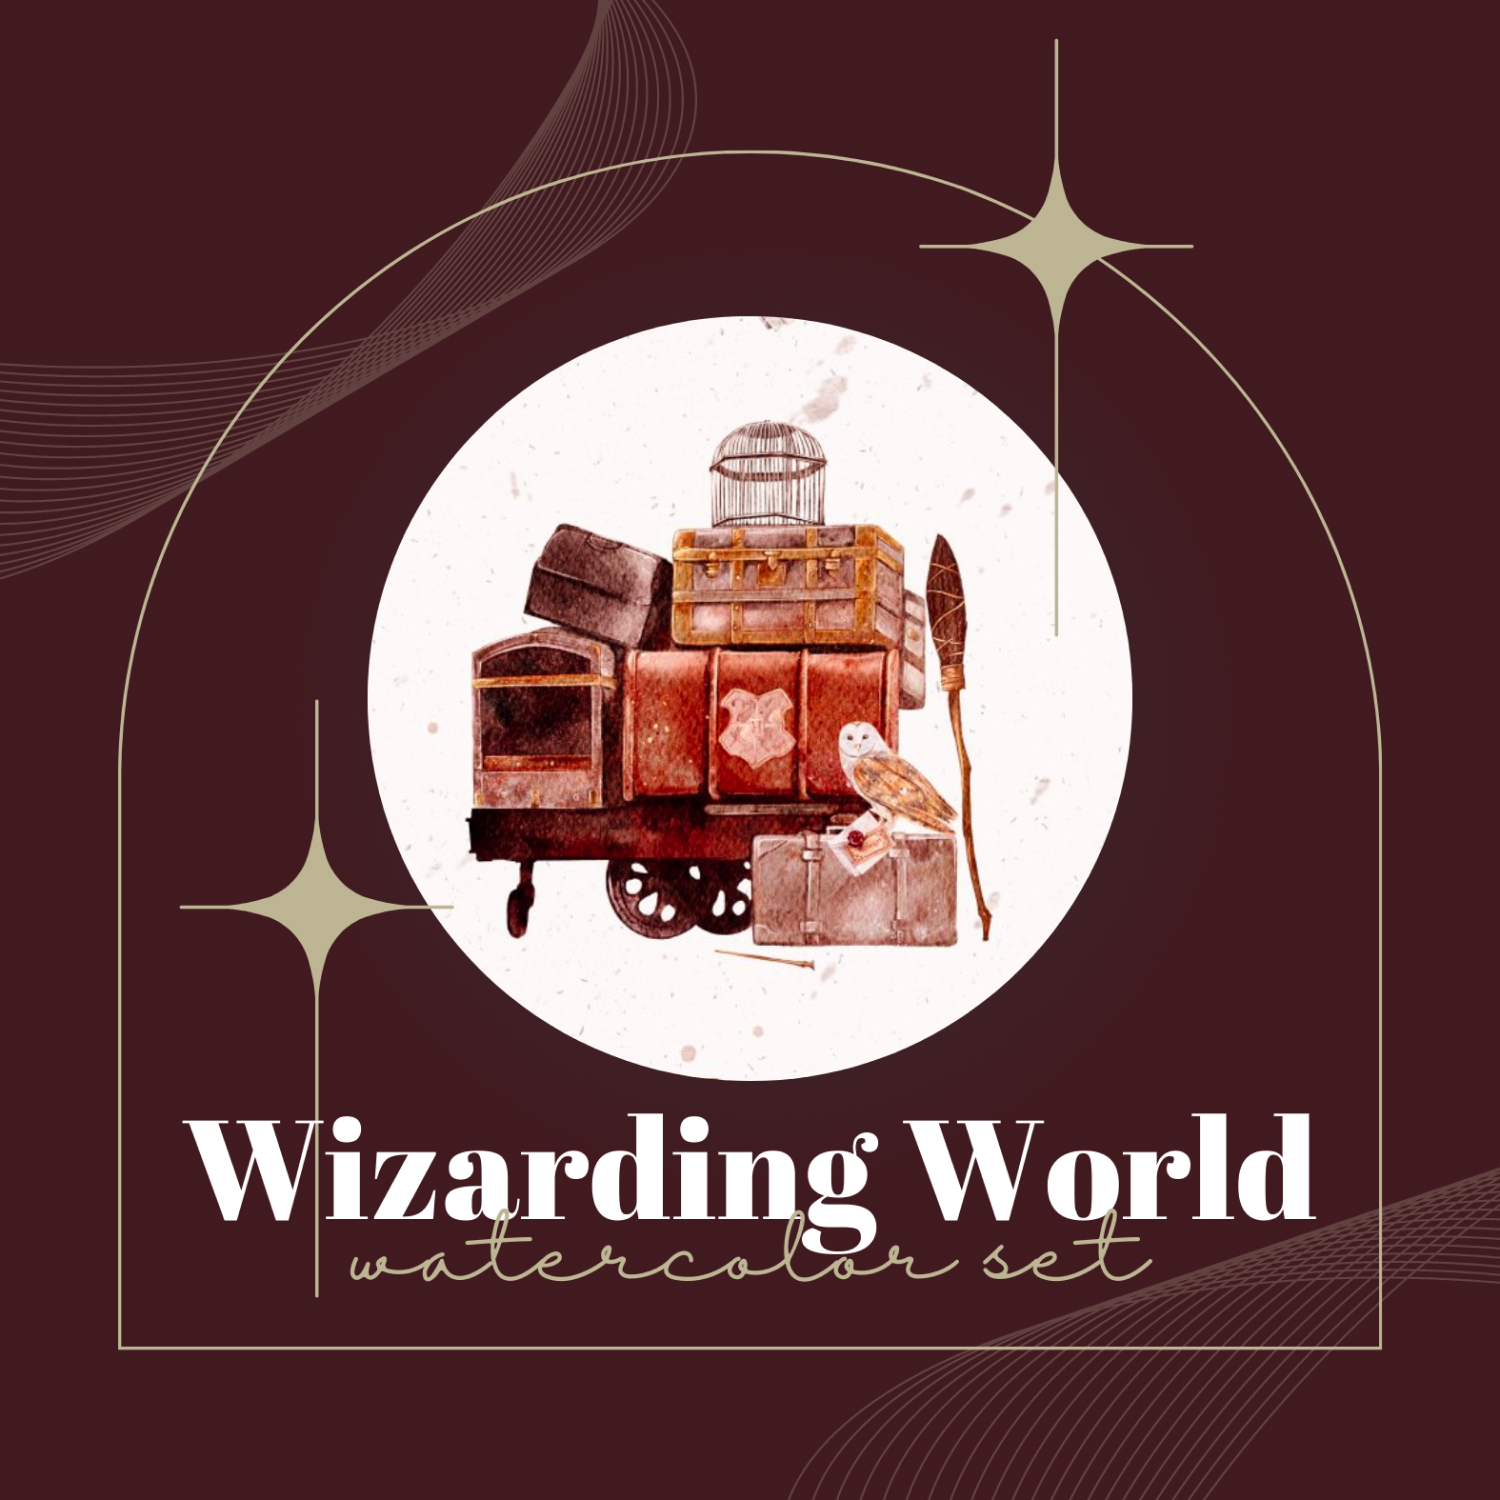 Wizarding World Watercolor set.